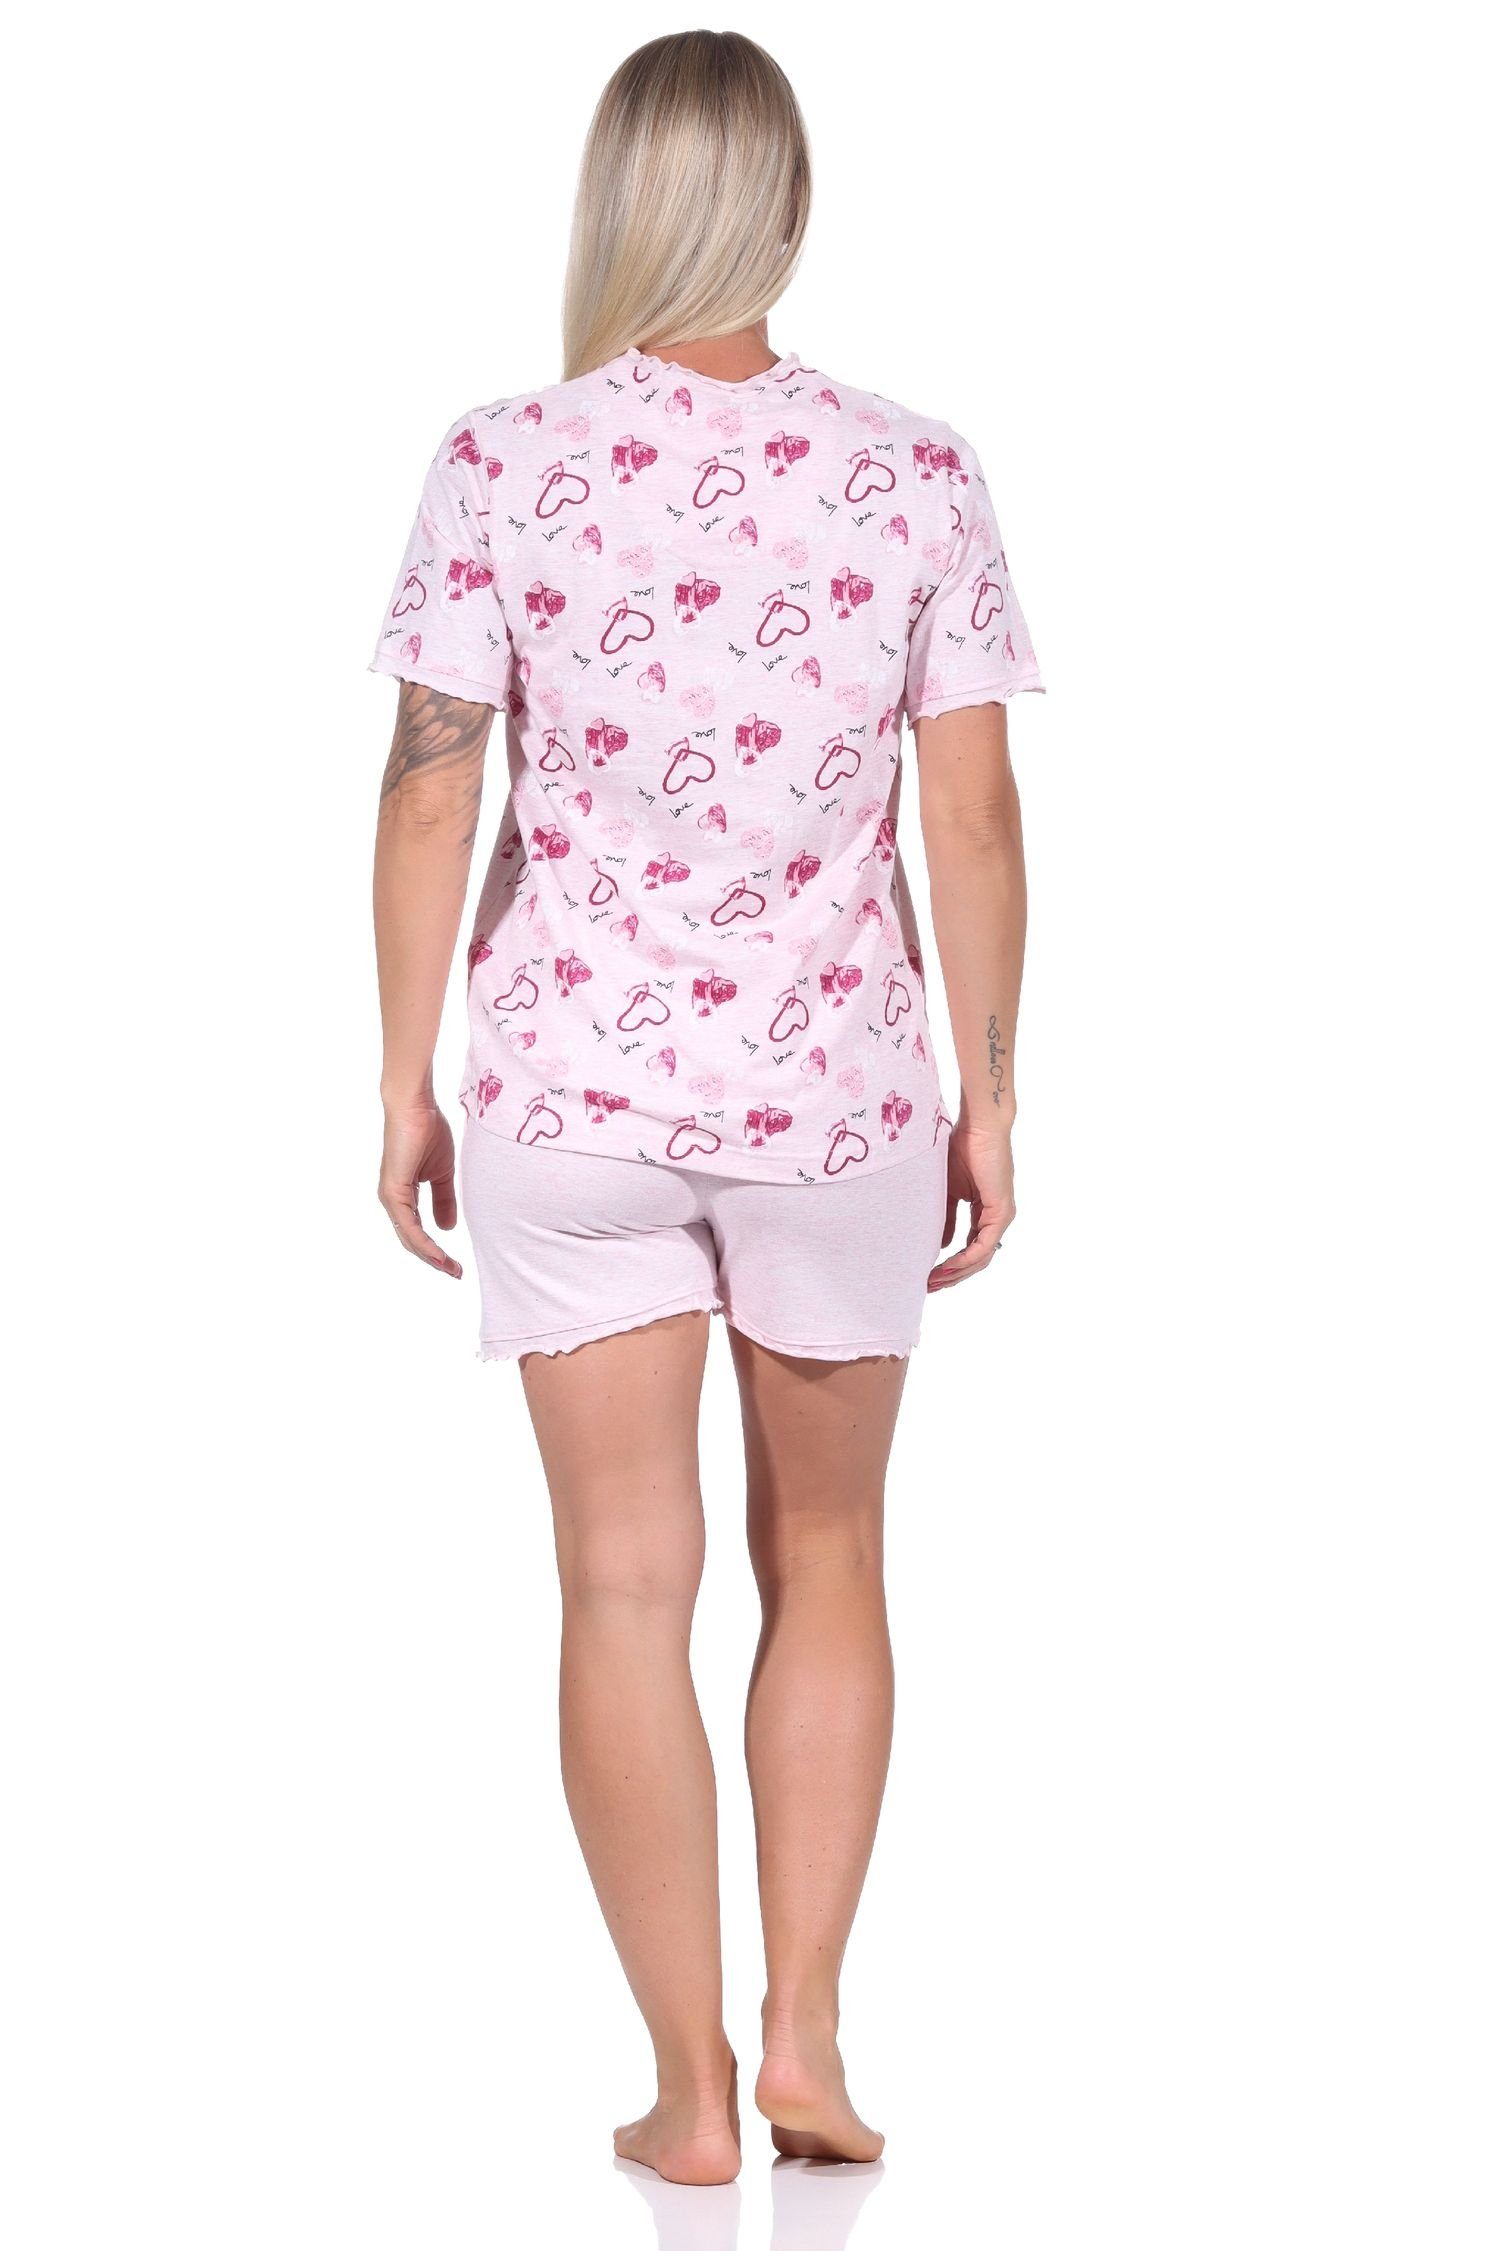 Schlafanzug Shorty Damen Herz - Übergröße in Optik Pyjama in rosa kurzarm Normann auch